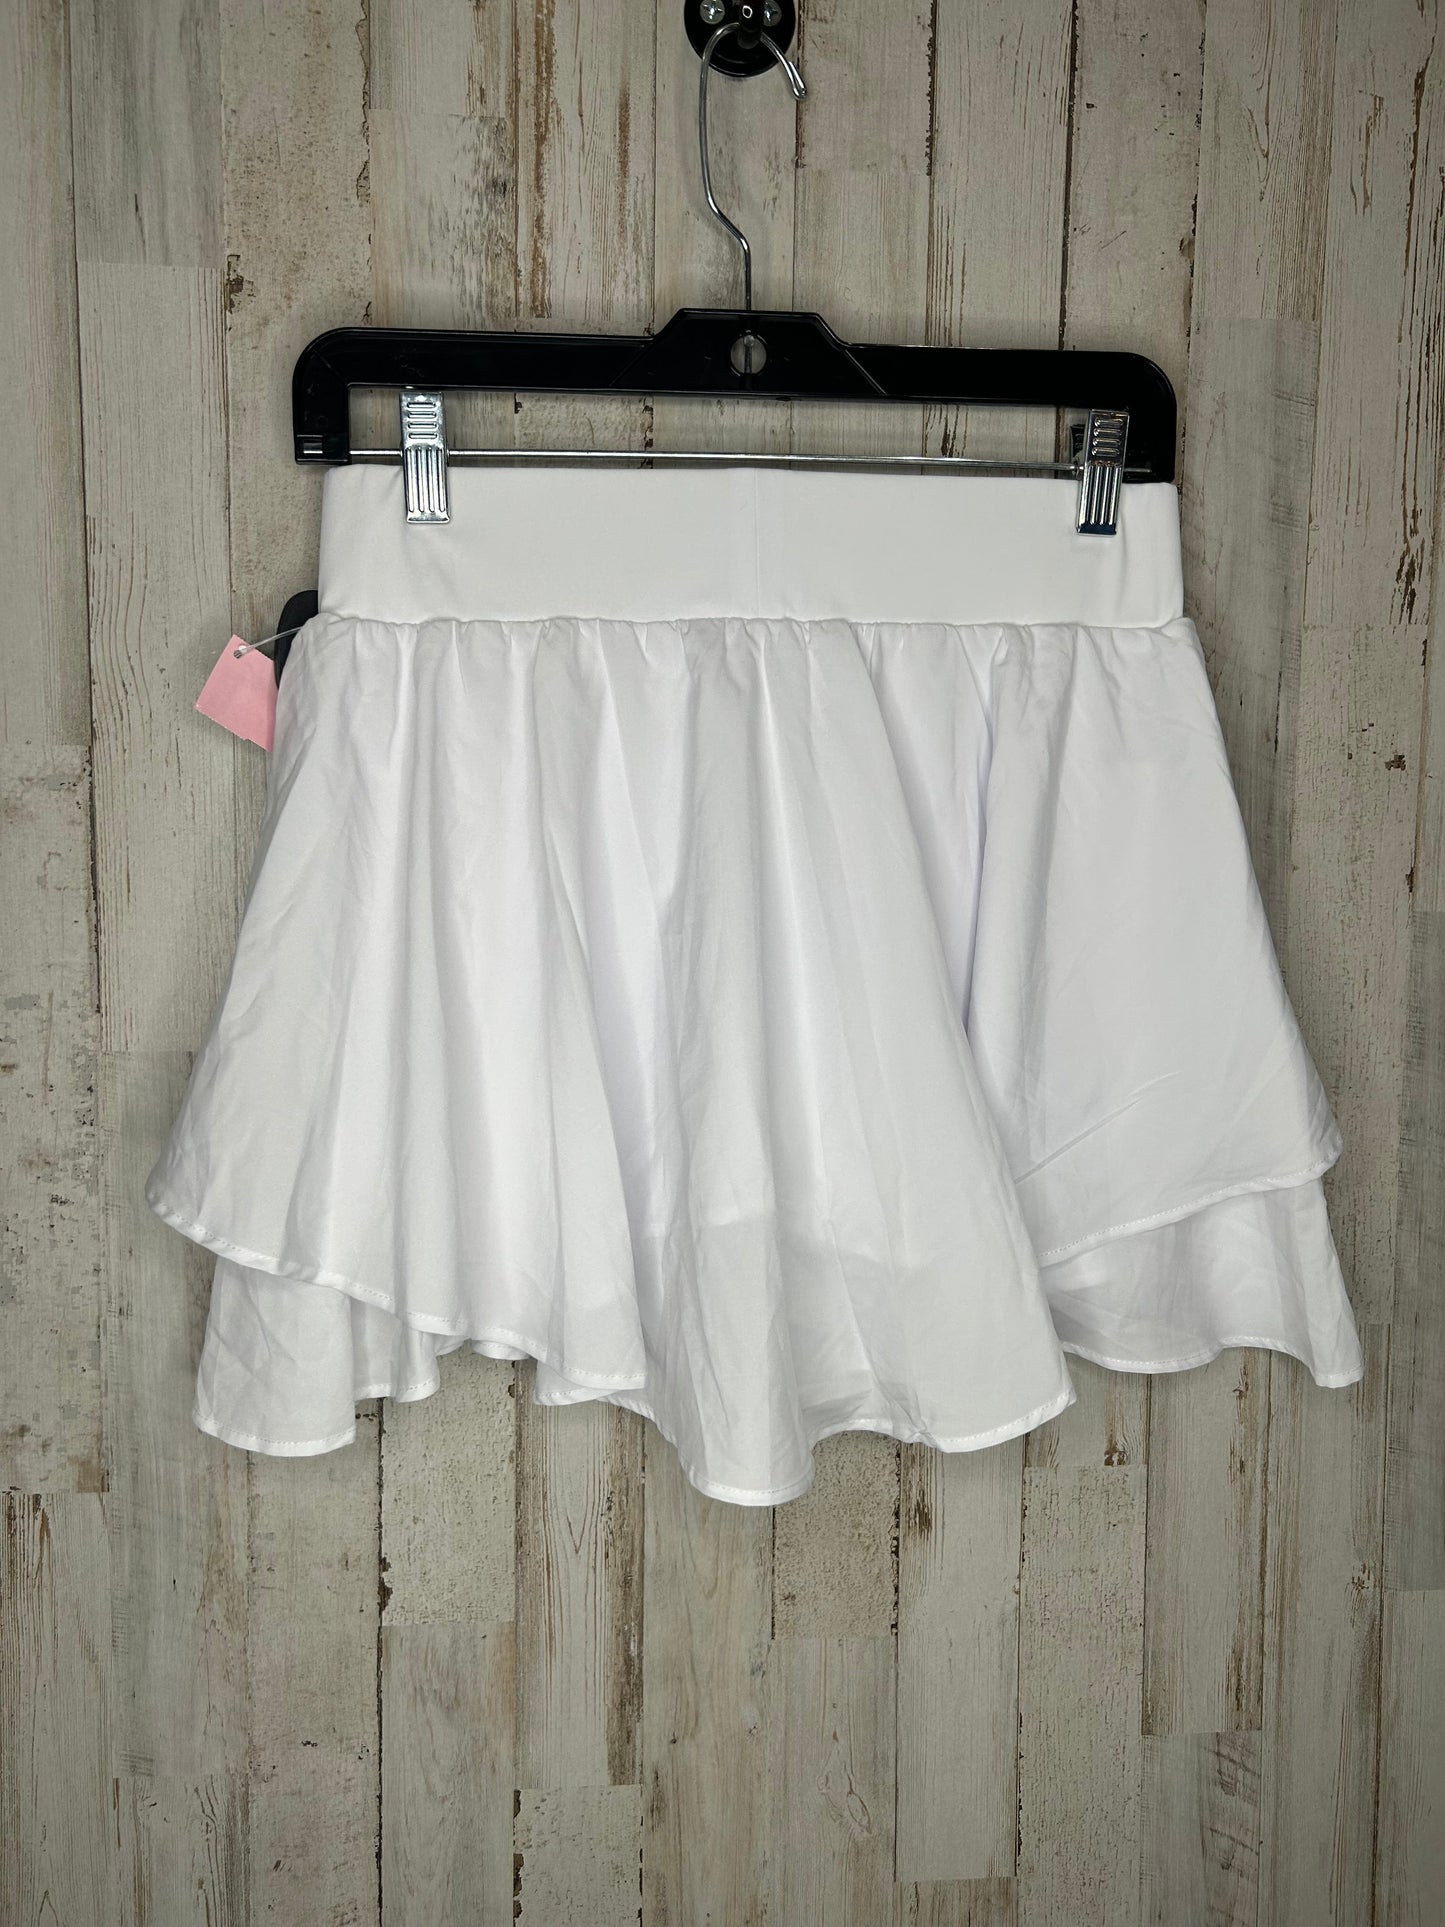 Athletic Skirt Skort By Cmc  Size: 8